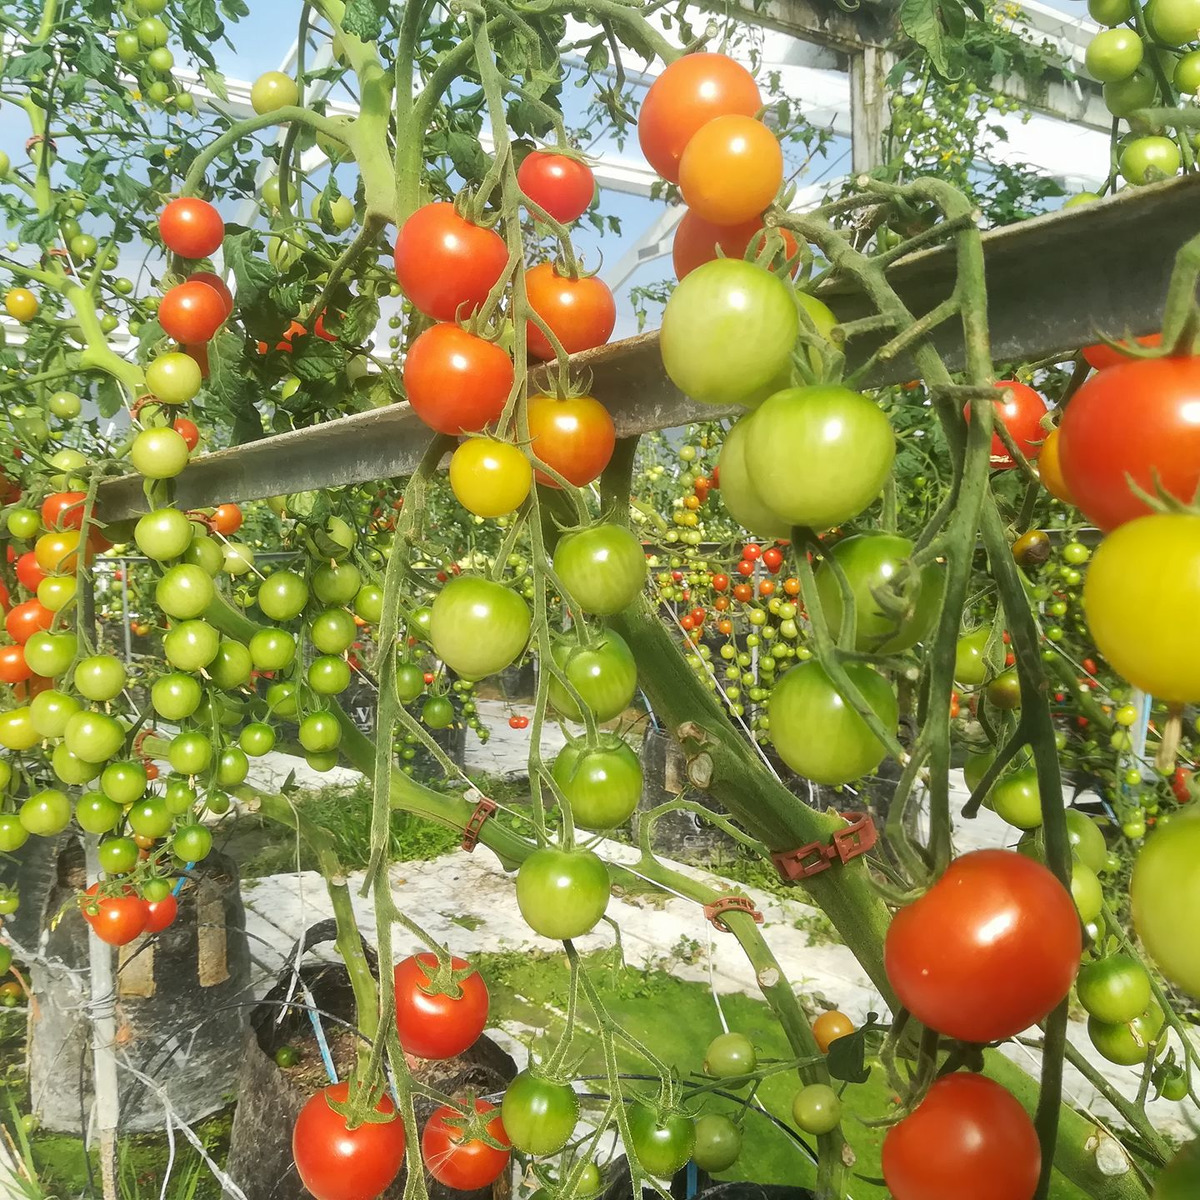 Tomatoes Tomatoes Tomatoes